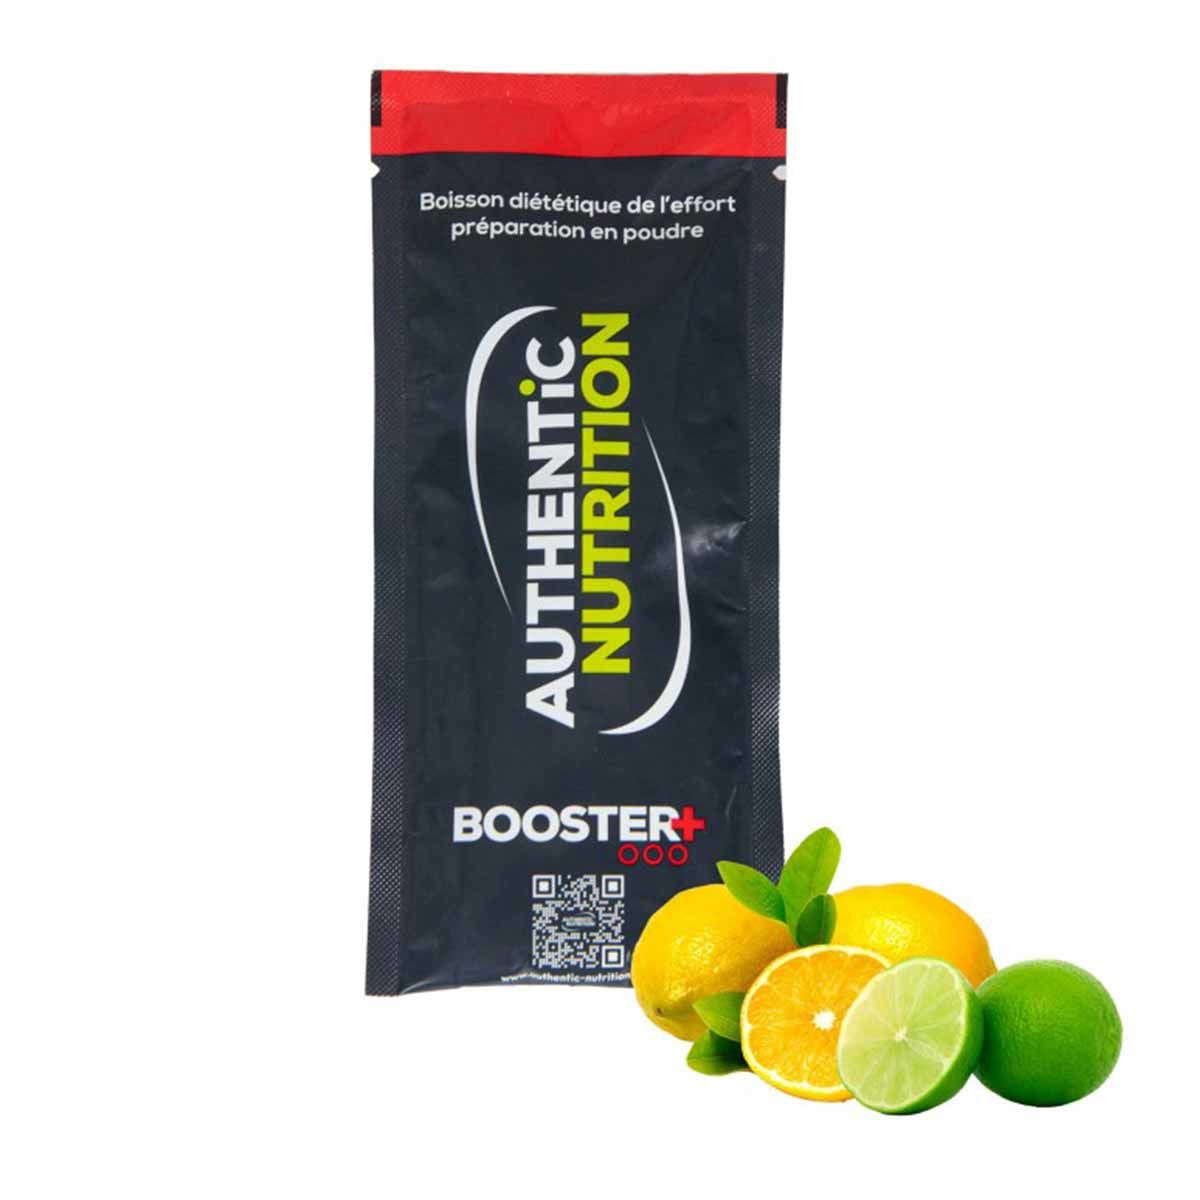 Authentic Nutrition Booster+ Energy Drink - Lemon